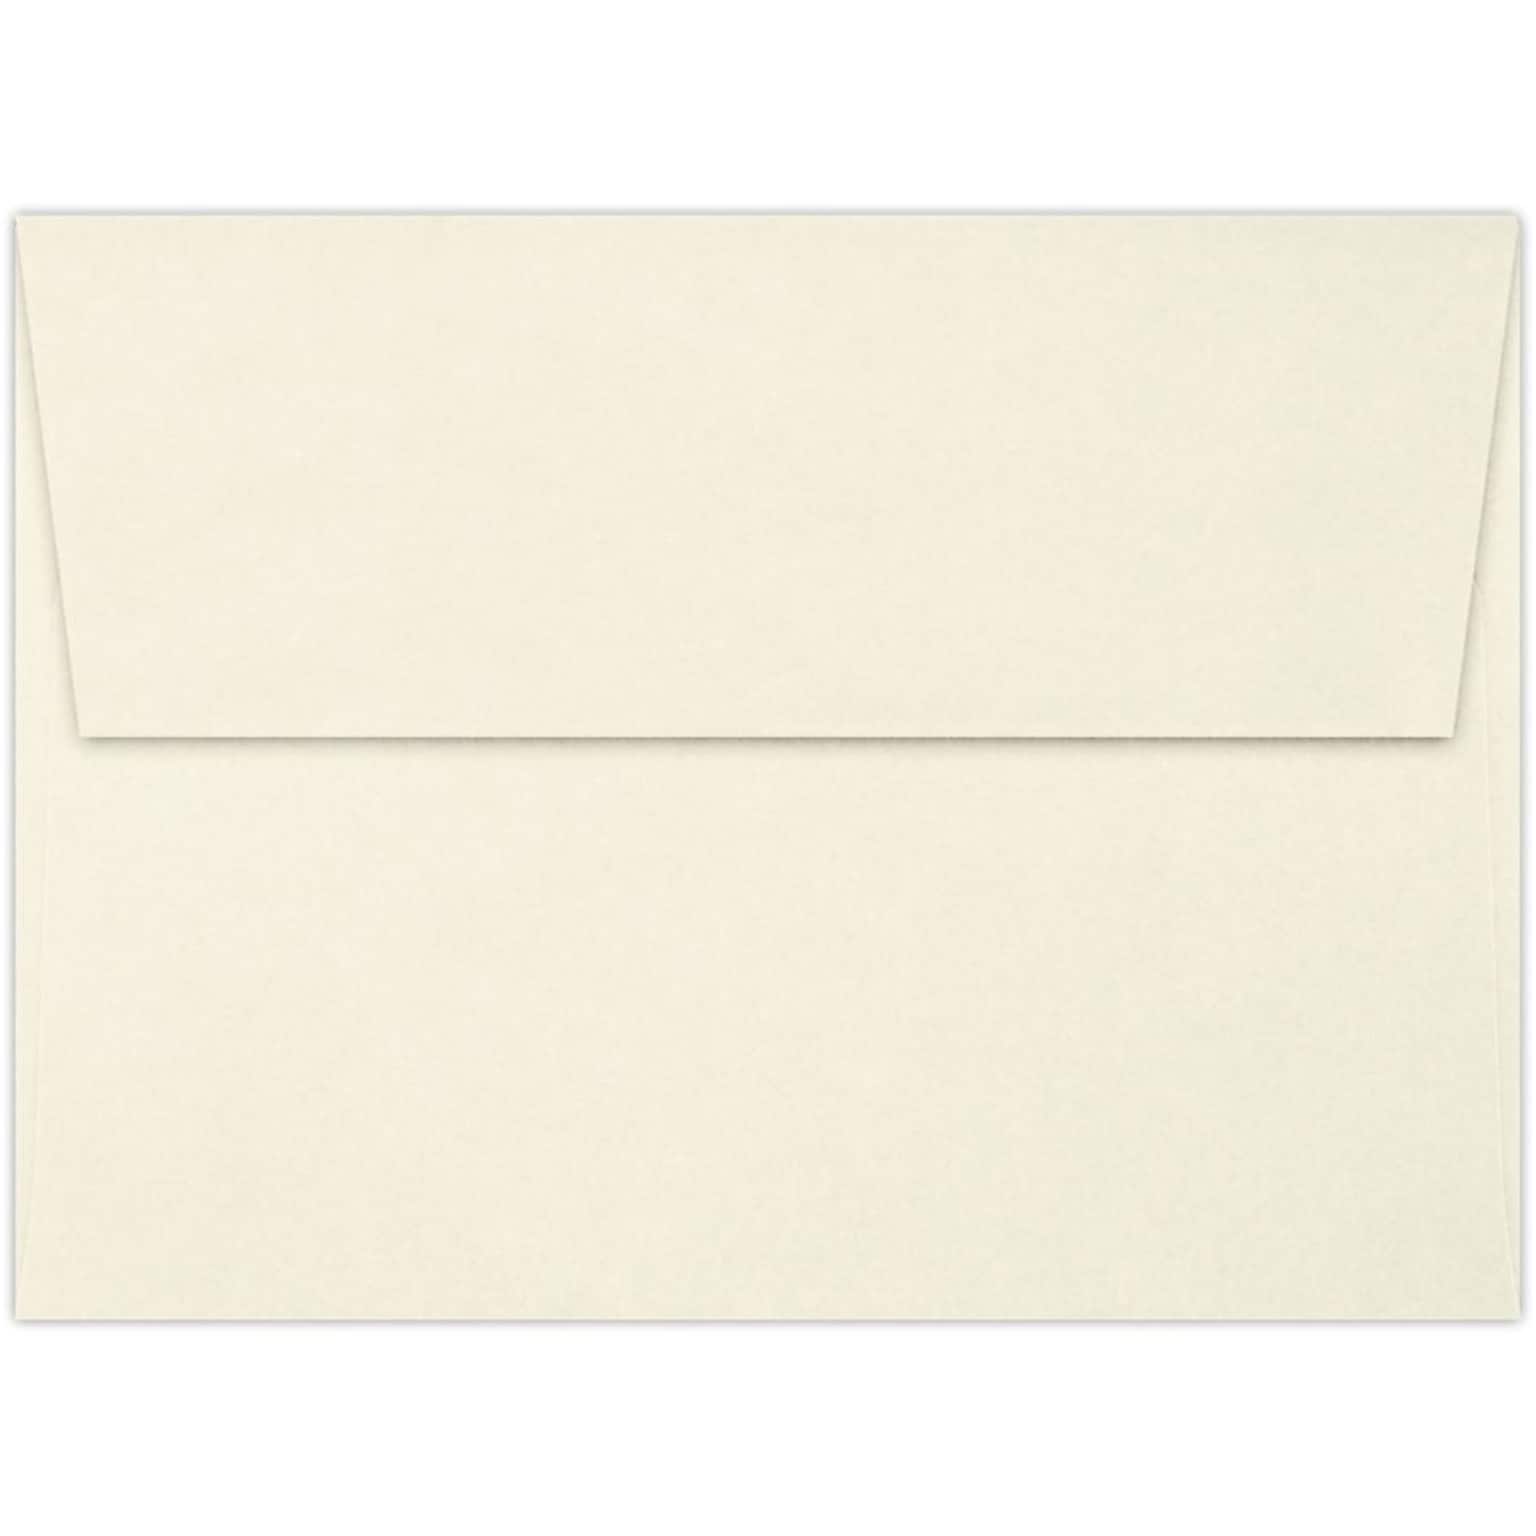 LUX A6 Invitation Envelopes (4 3/4 x 6 1/2) 250/Pack, 70lb. Classic Linen® Natural White (4875-70NWLI-250)